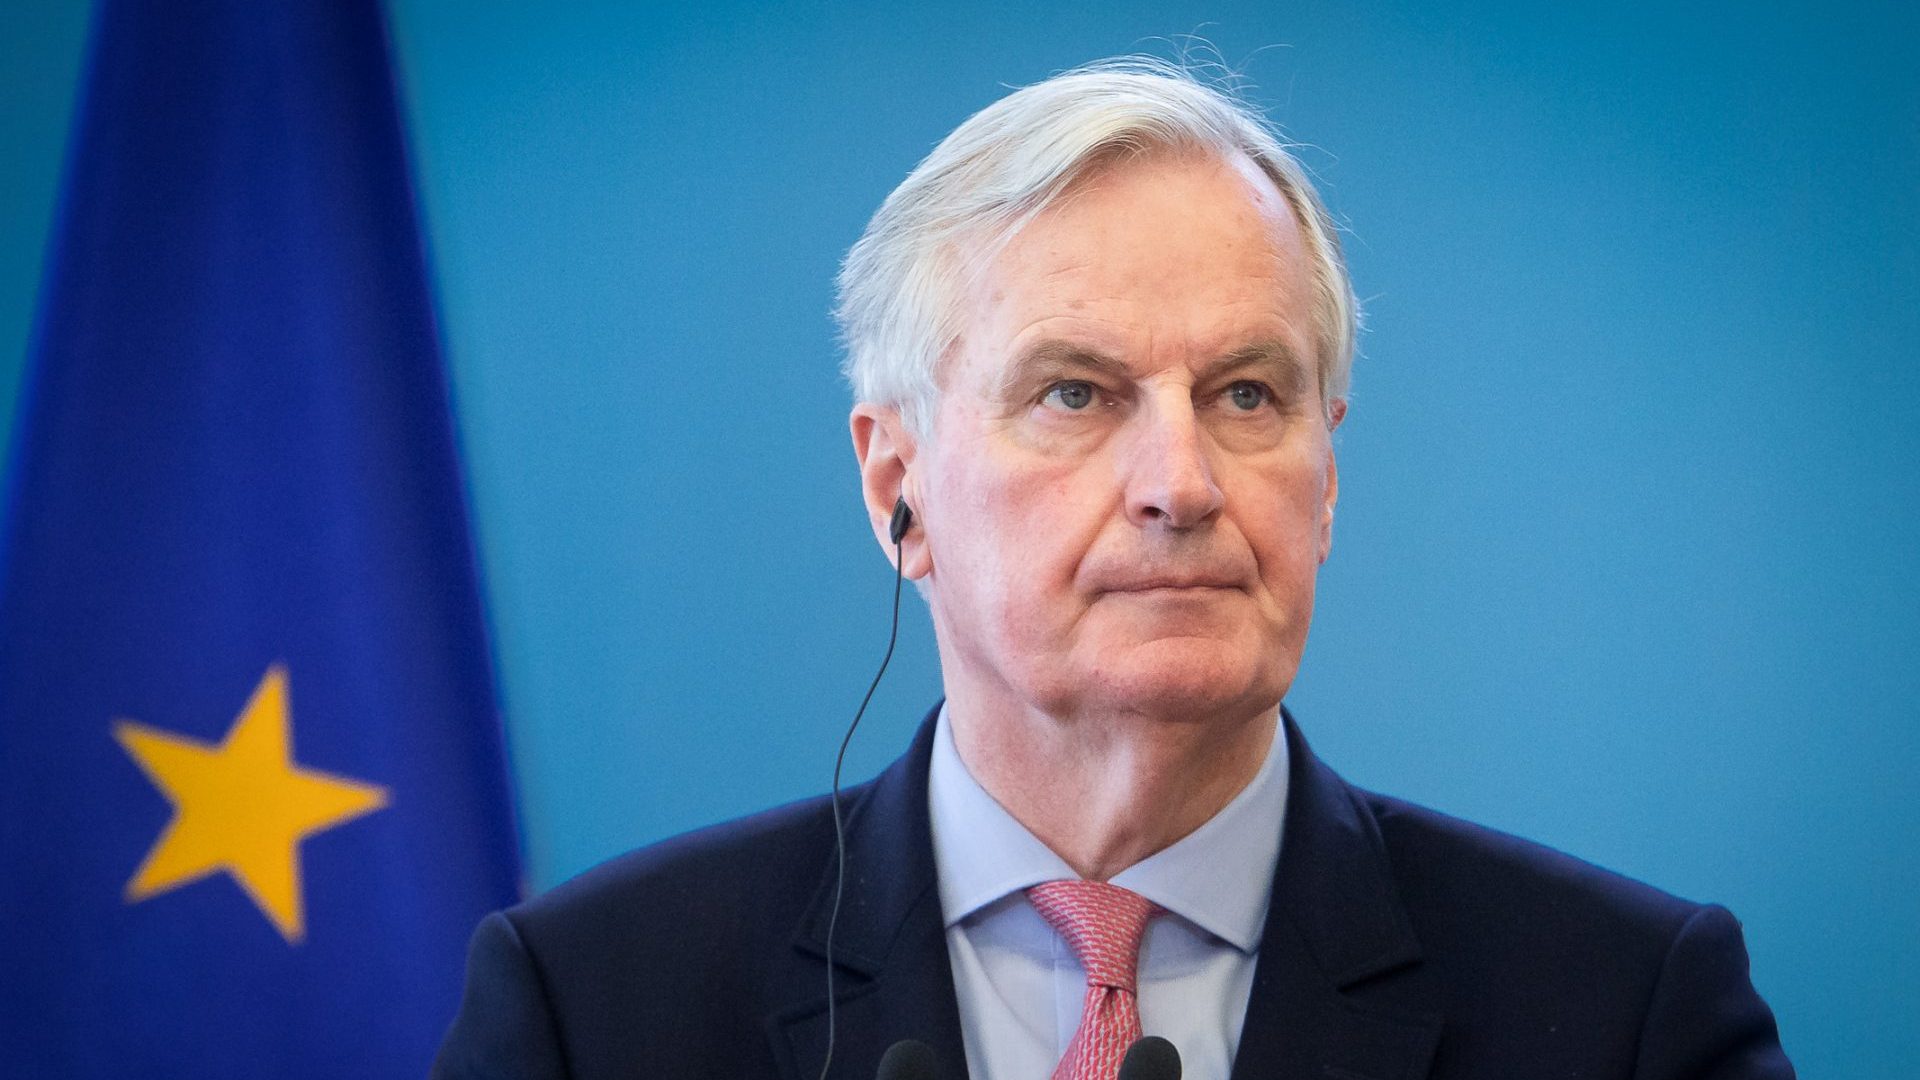 Michel Barnier in Warsaw, Poland in 2019 (Photo by Mateusz Wlodarczyk/NurPhoto via Getty Images)